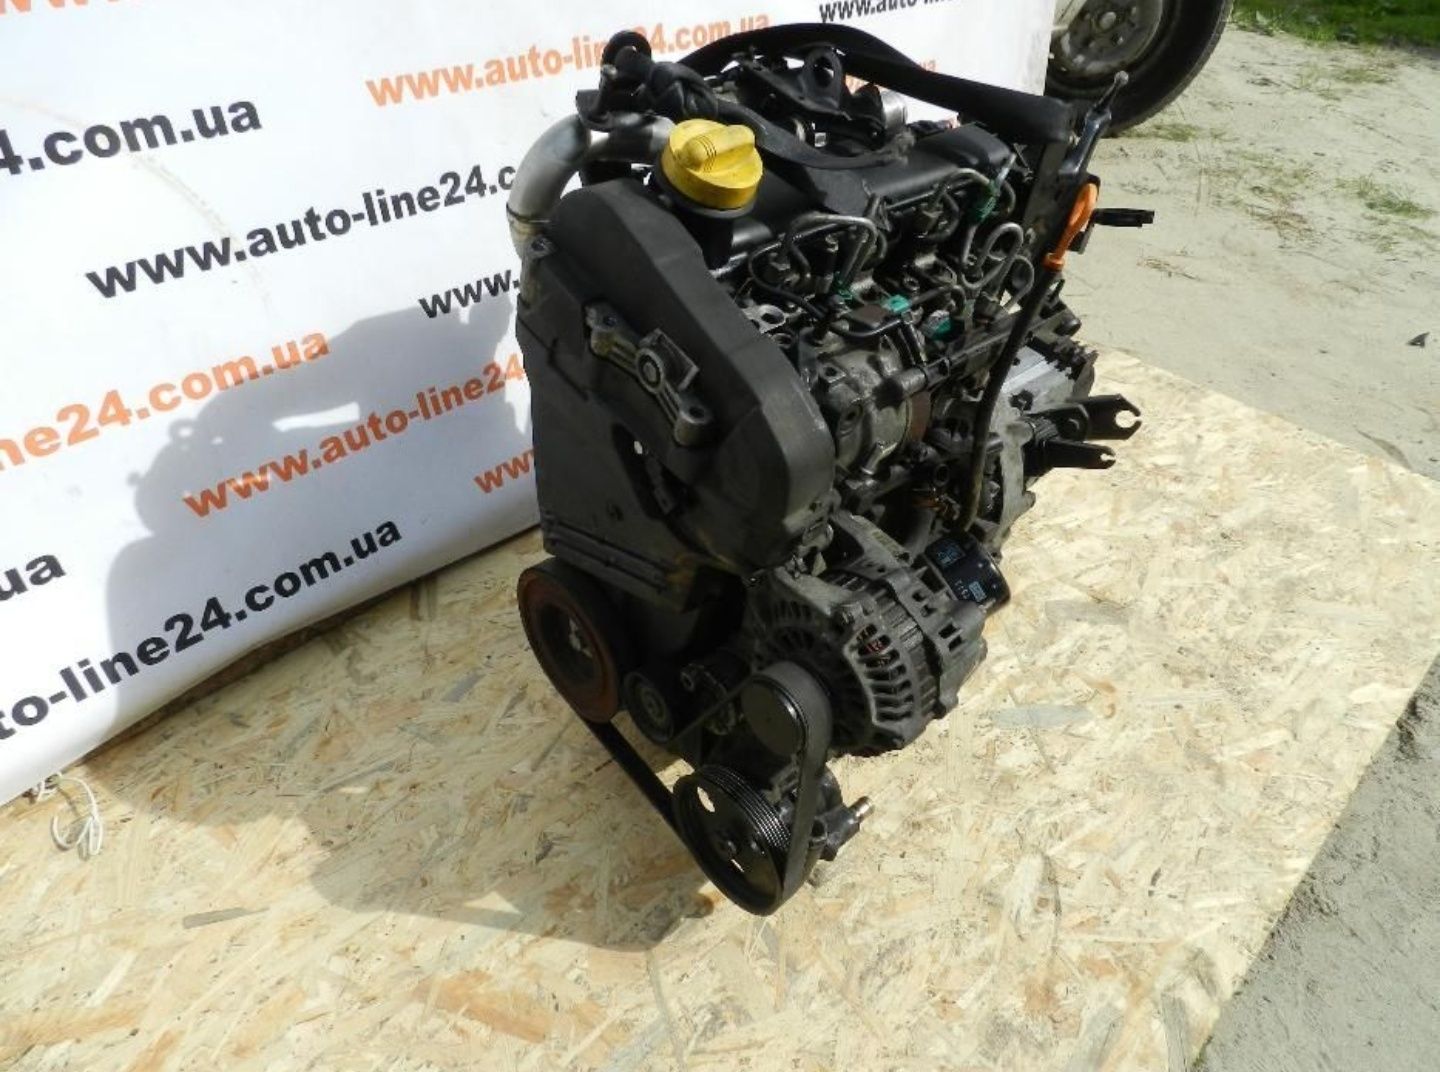 Двигун Мотор Двигатель 1.5DCIK9K Renault Megane Kangoo2 Scenic2 євро 3